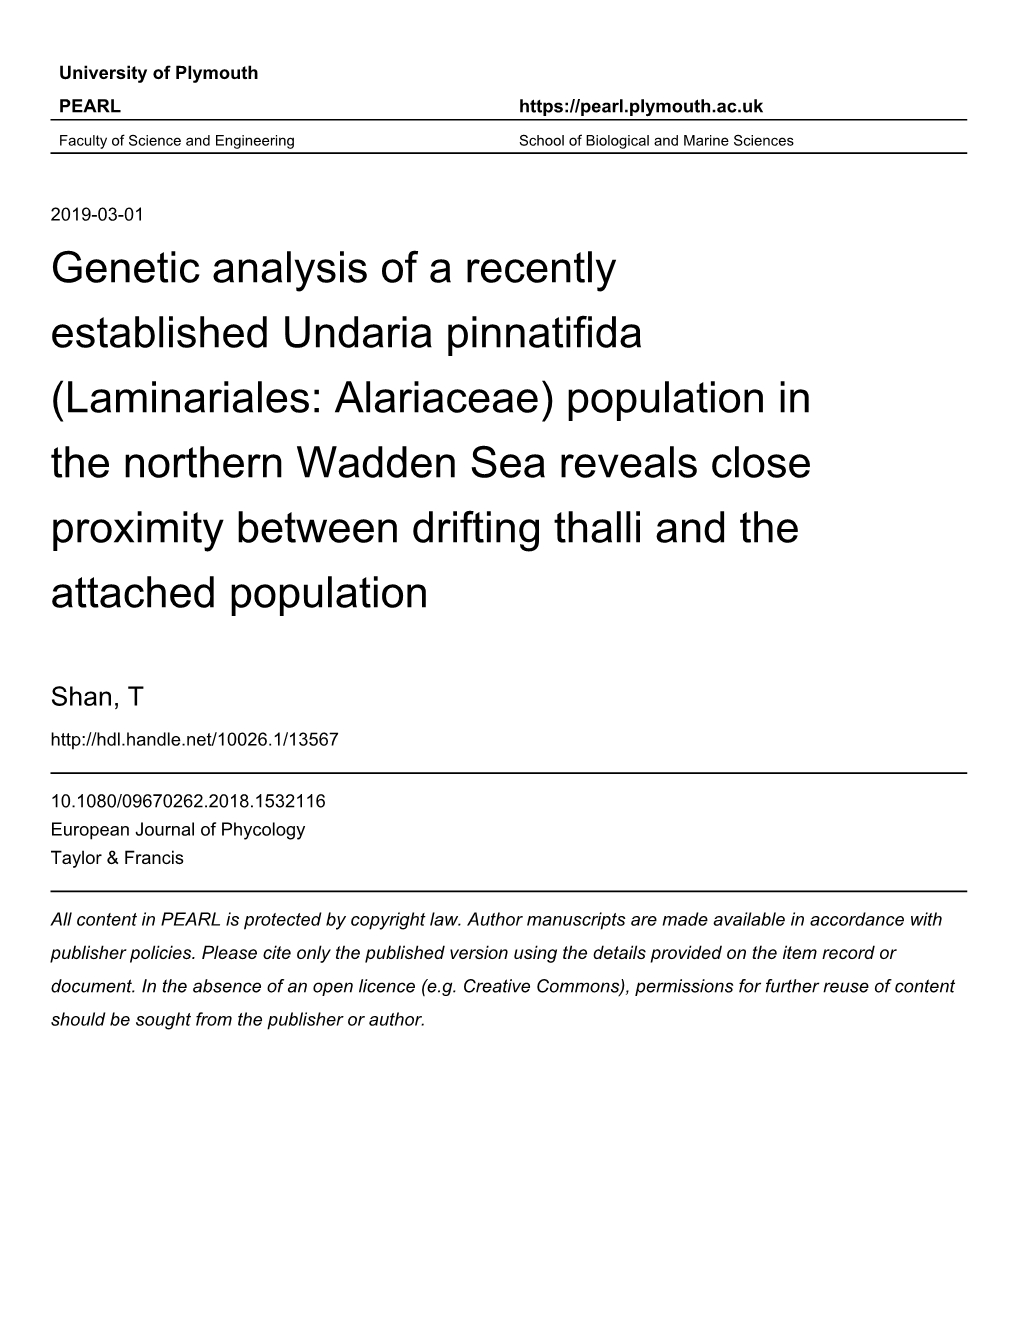 Genetic Analysis of a Recently Established Undaria Pinnatifida